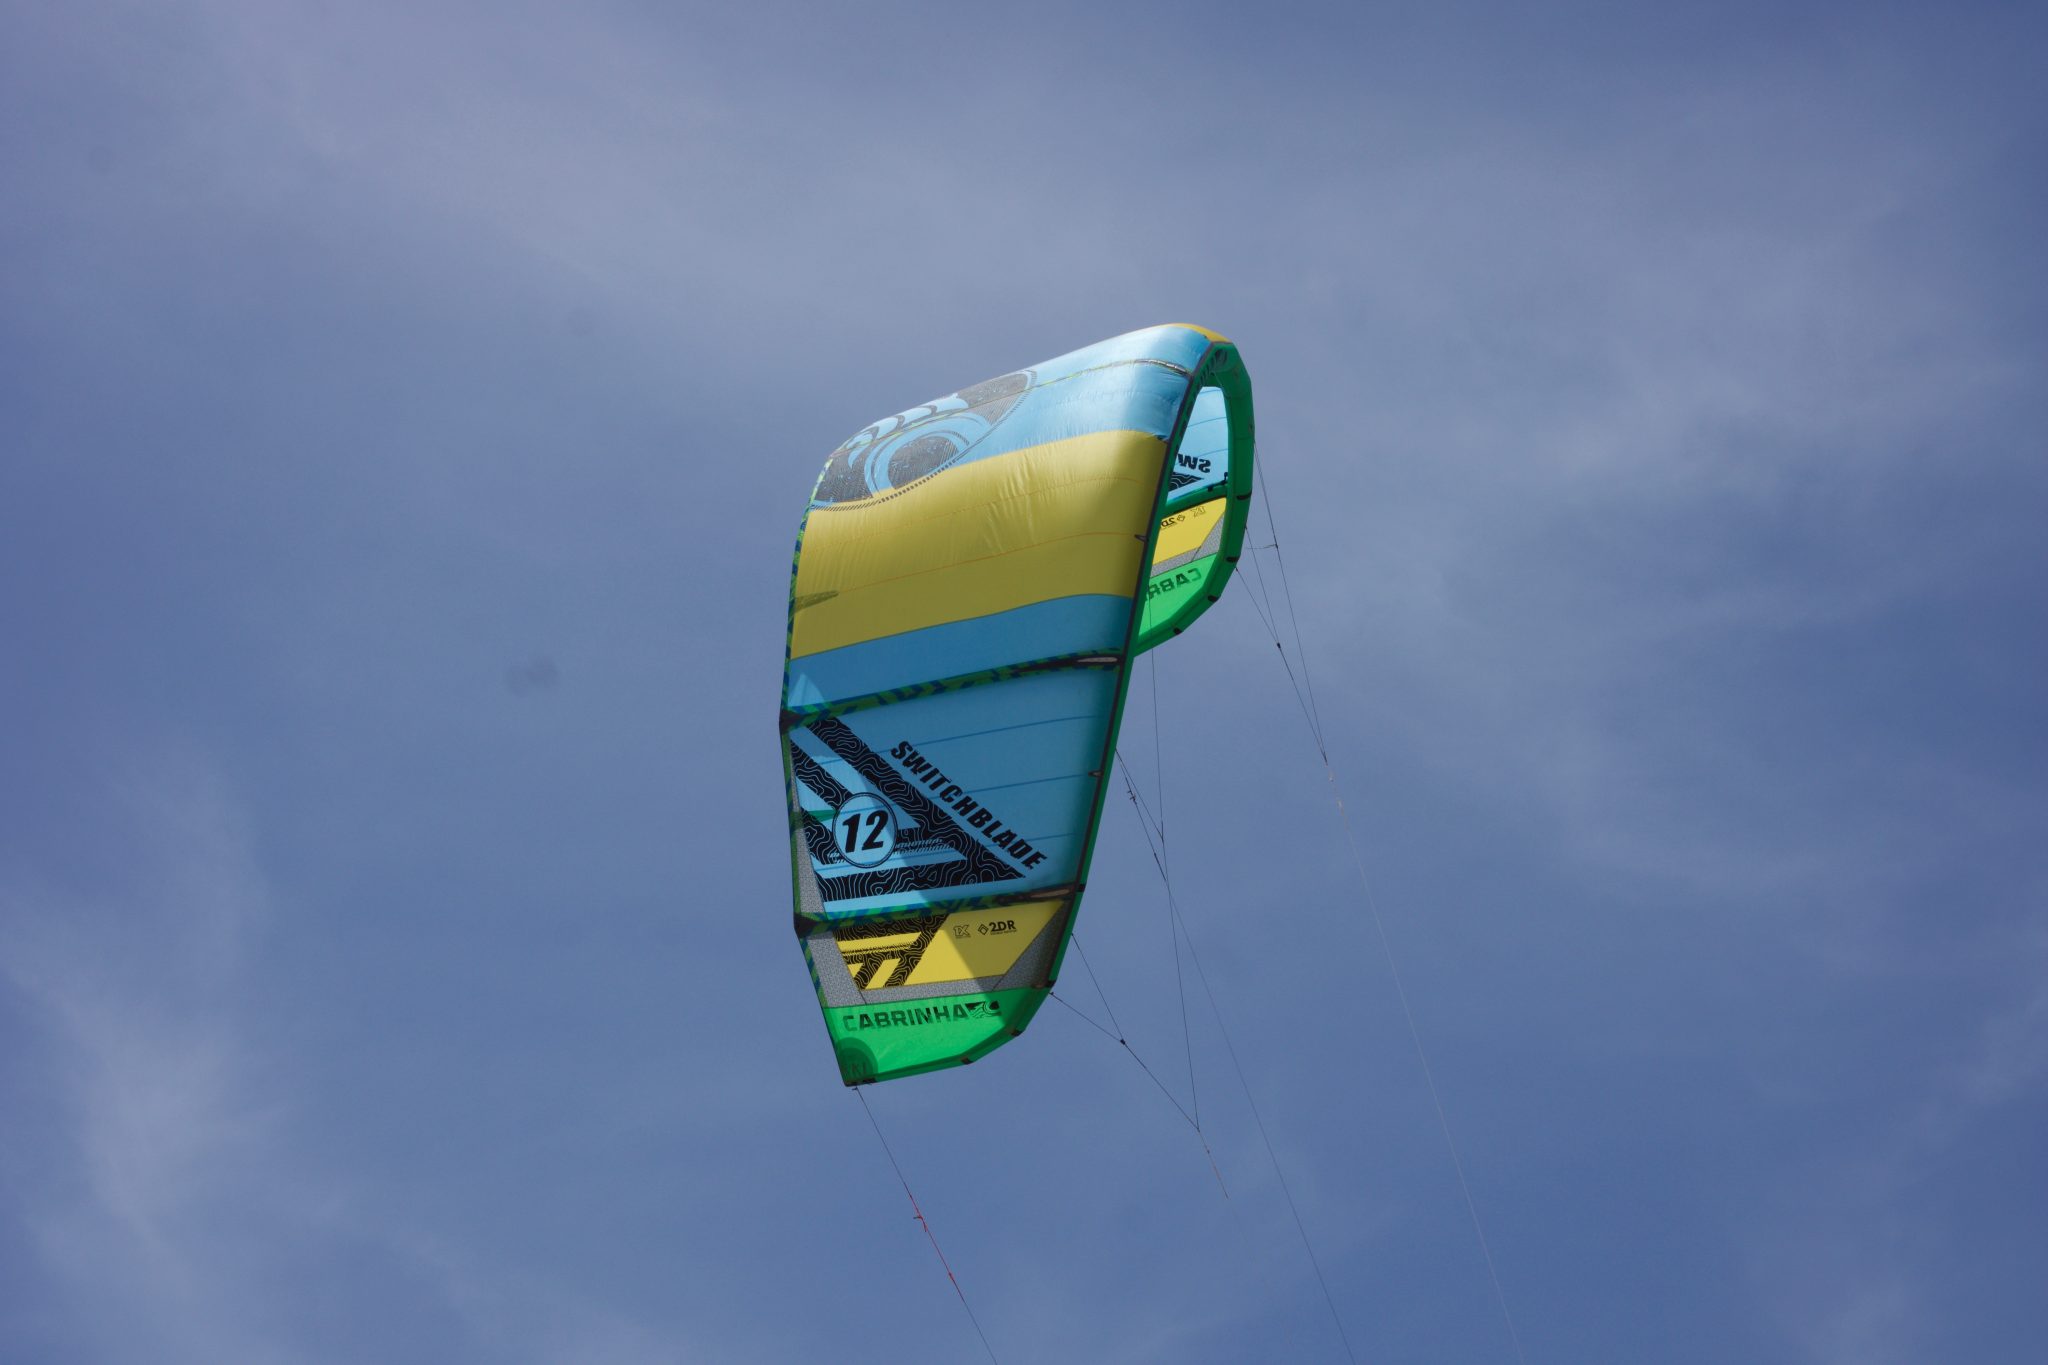 Cabrinha Switchblade 12m 2017 | Kitesurfing » Kites | Free Kitesurfing | IKSURFMAG